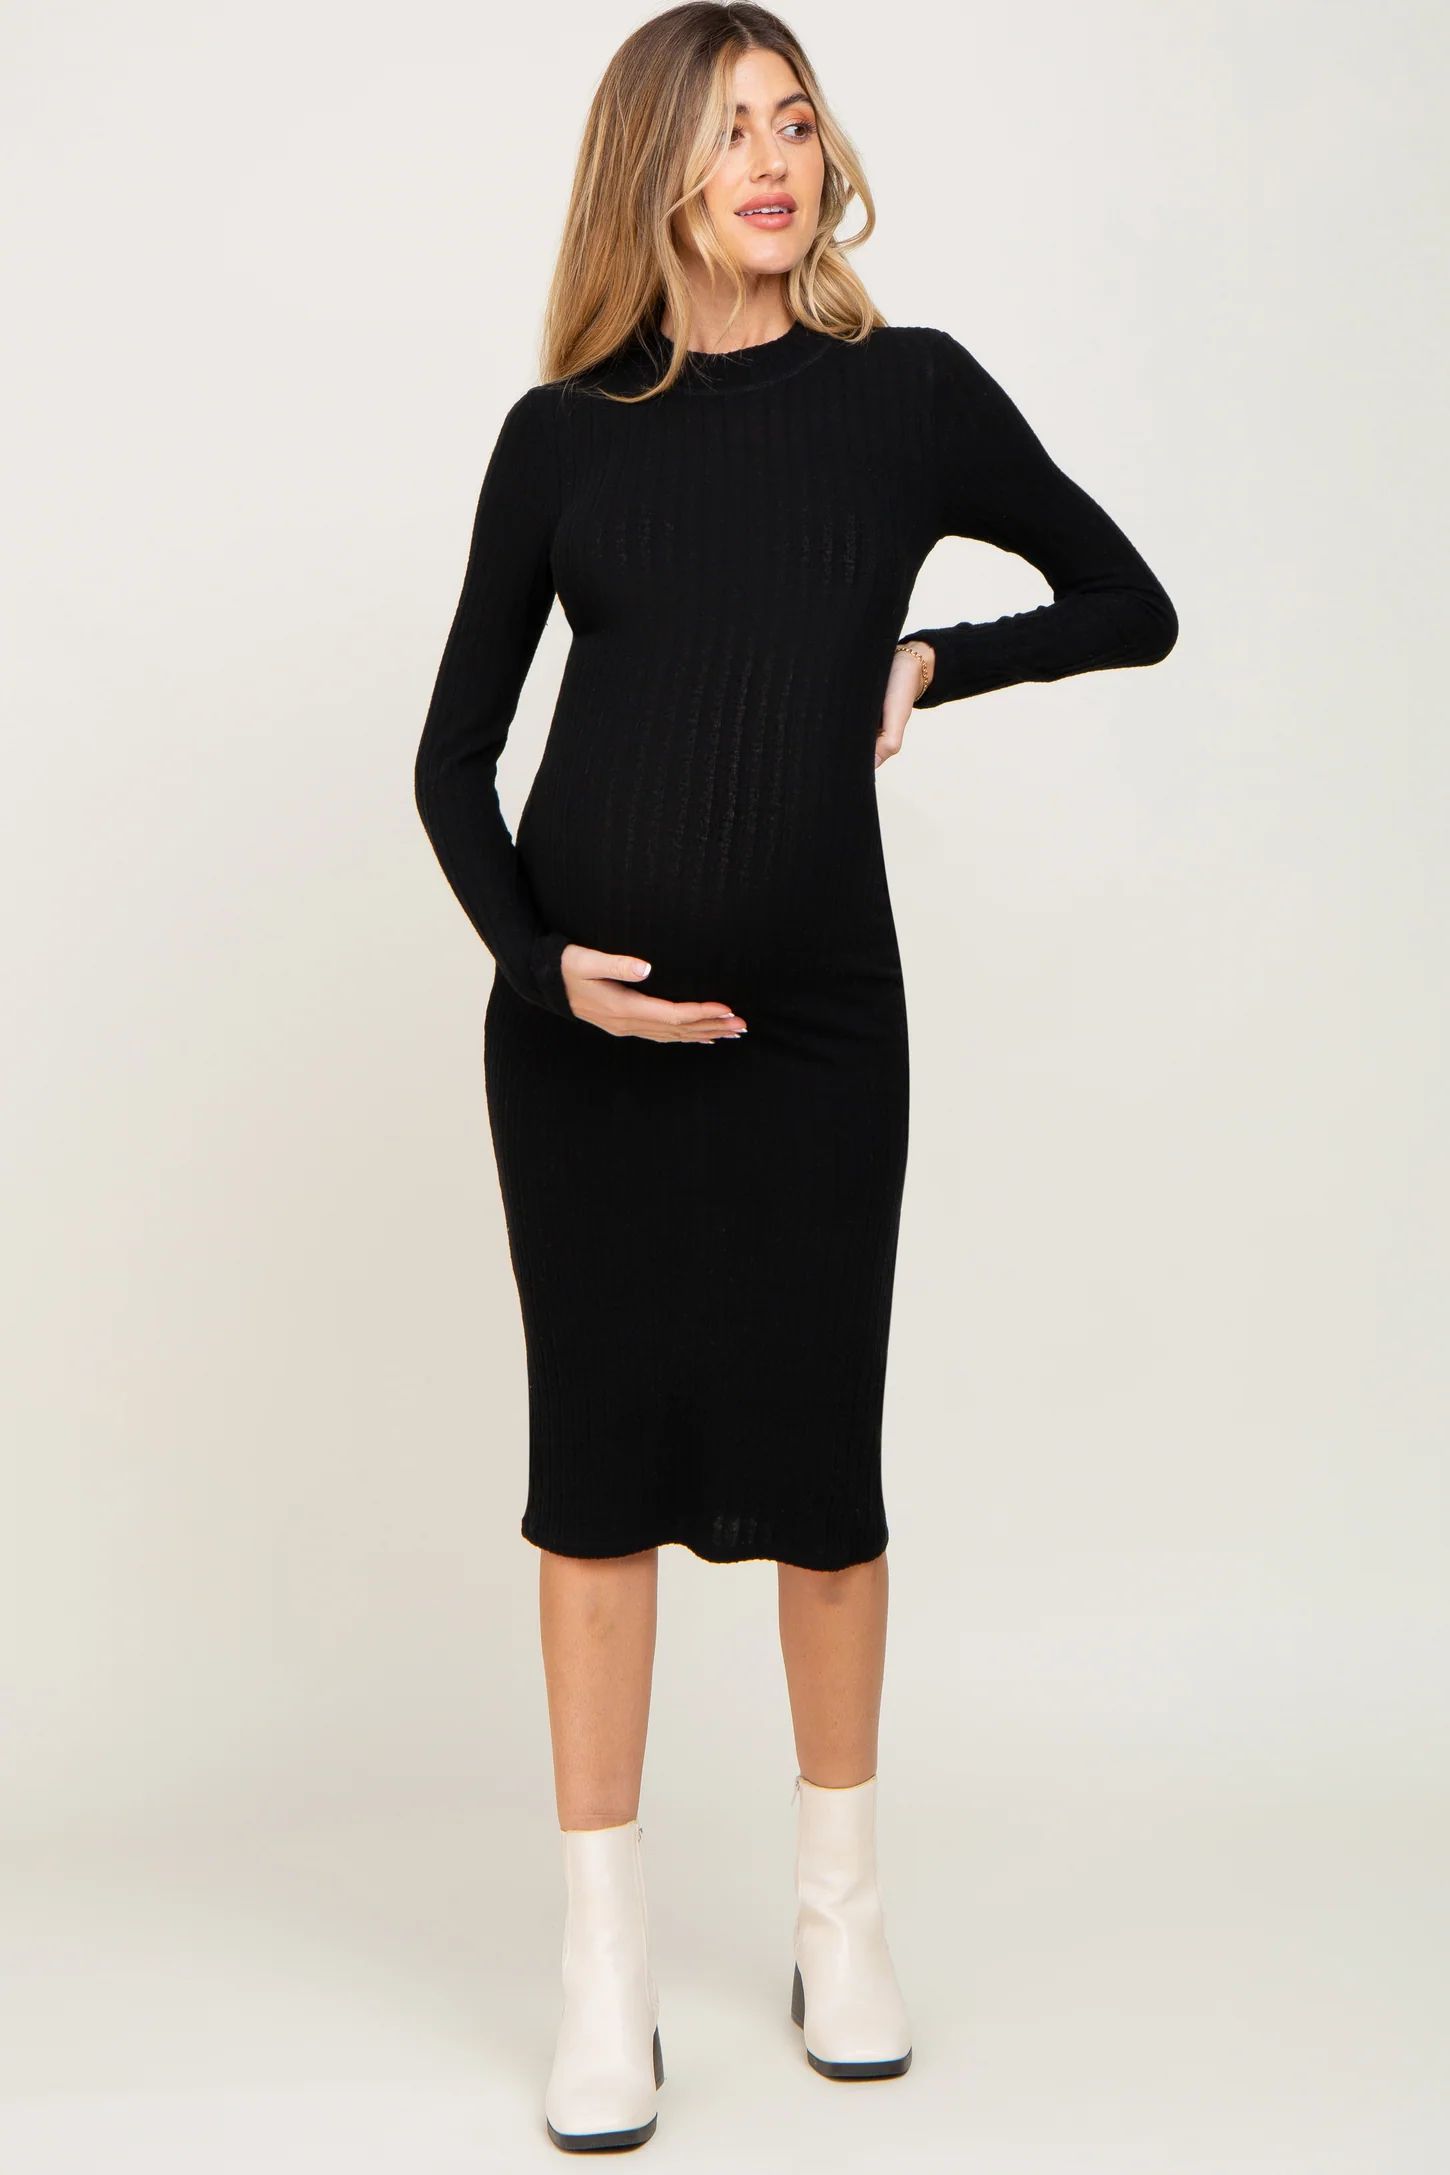 Black Brushed Knit Long Sleeve Mock Neck Maternity Dress | PinkBlush Maternity